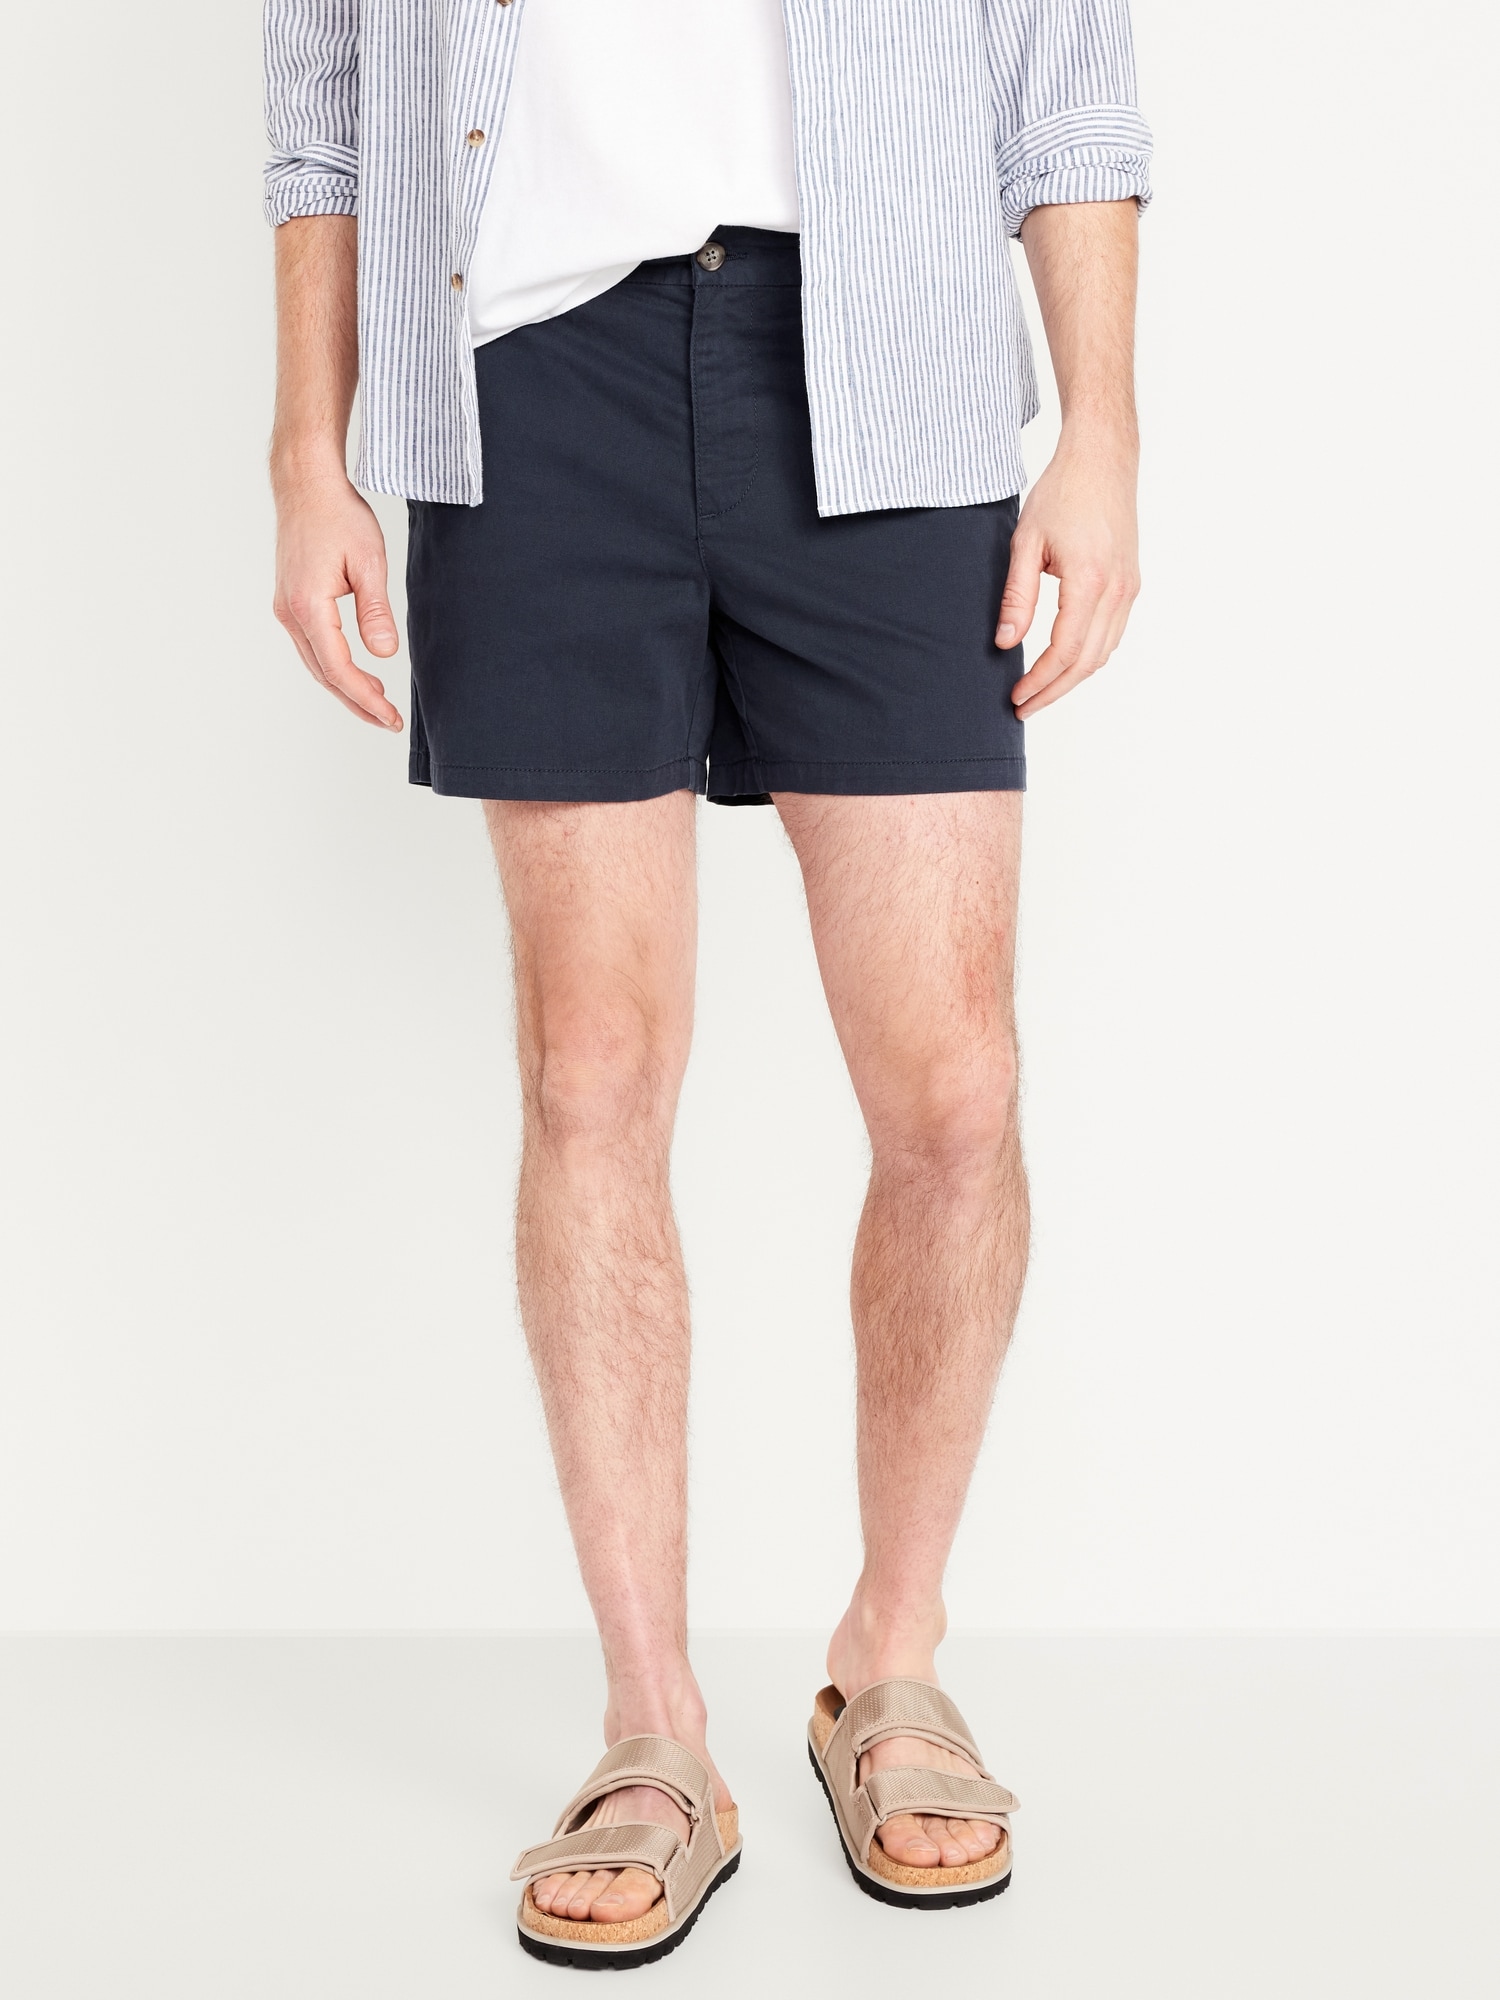 Slim Built-In Flex Rotation Chino Shorts -- 5-inch inseam